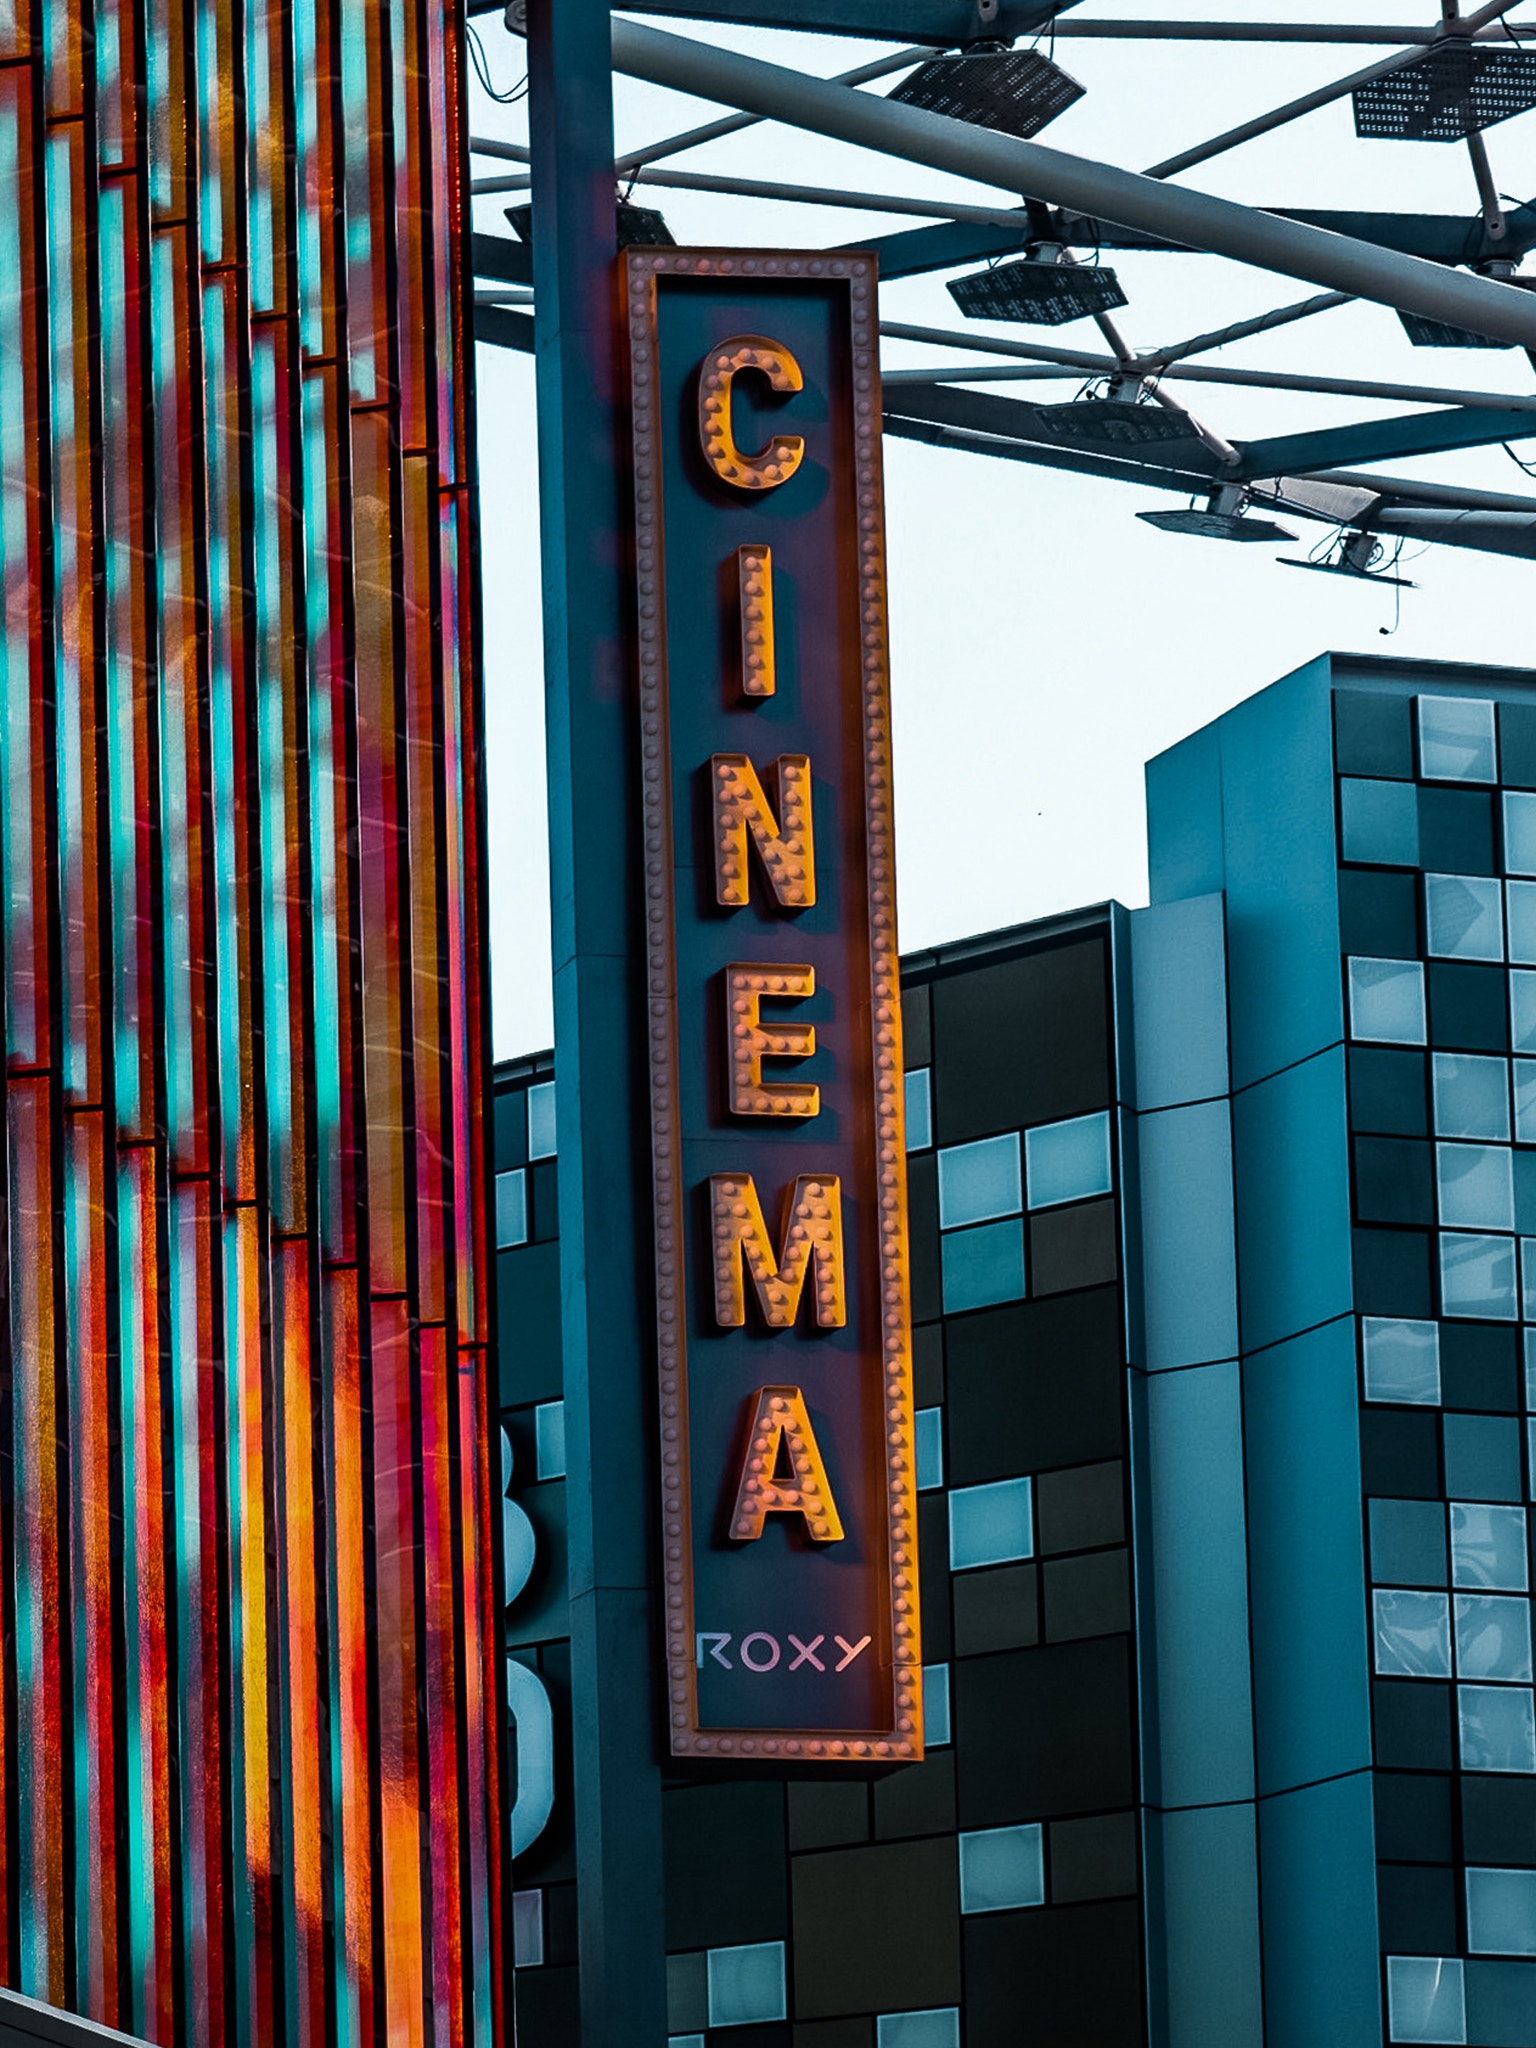  Repense BandNews: a cultura dos cinemas de rua